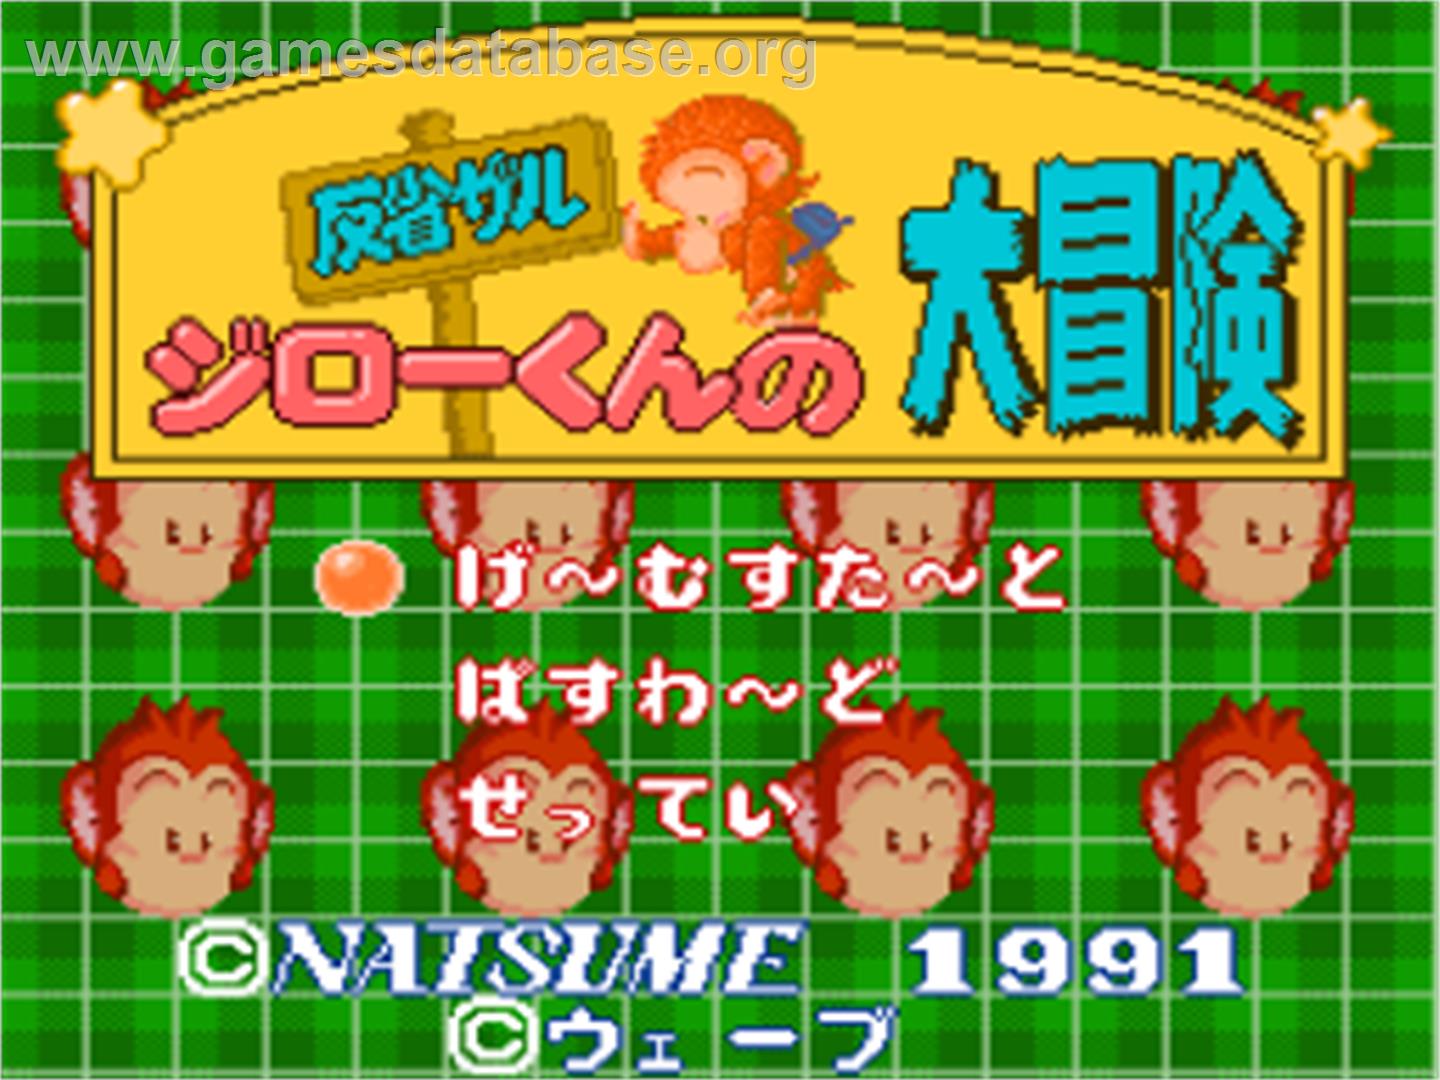 Spanky's Quest - Nintendo SNES - Artwork - Title Screen